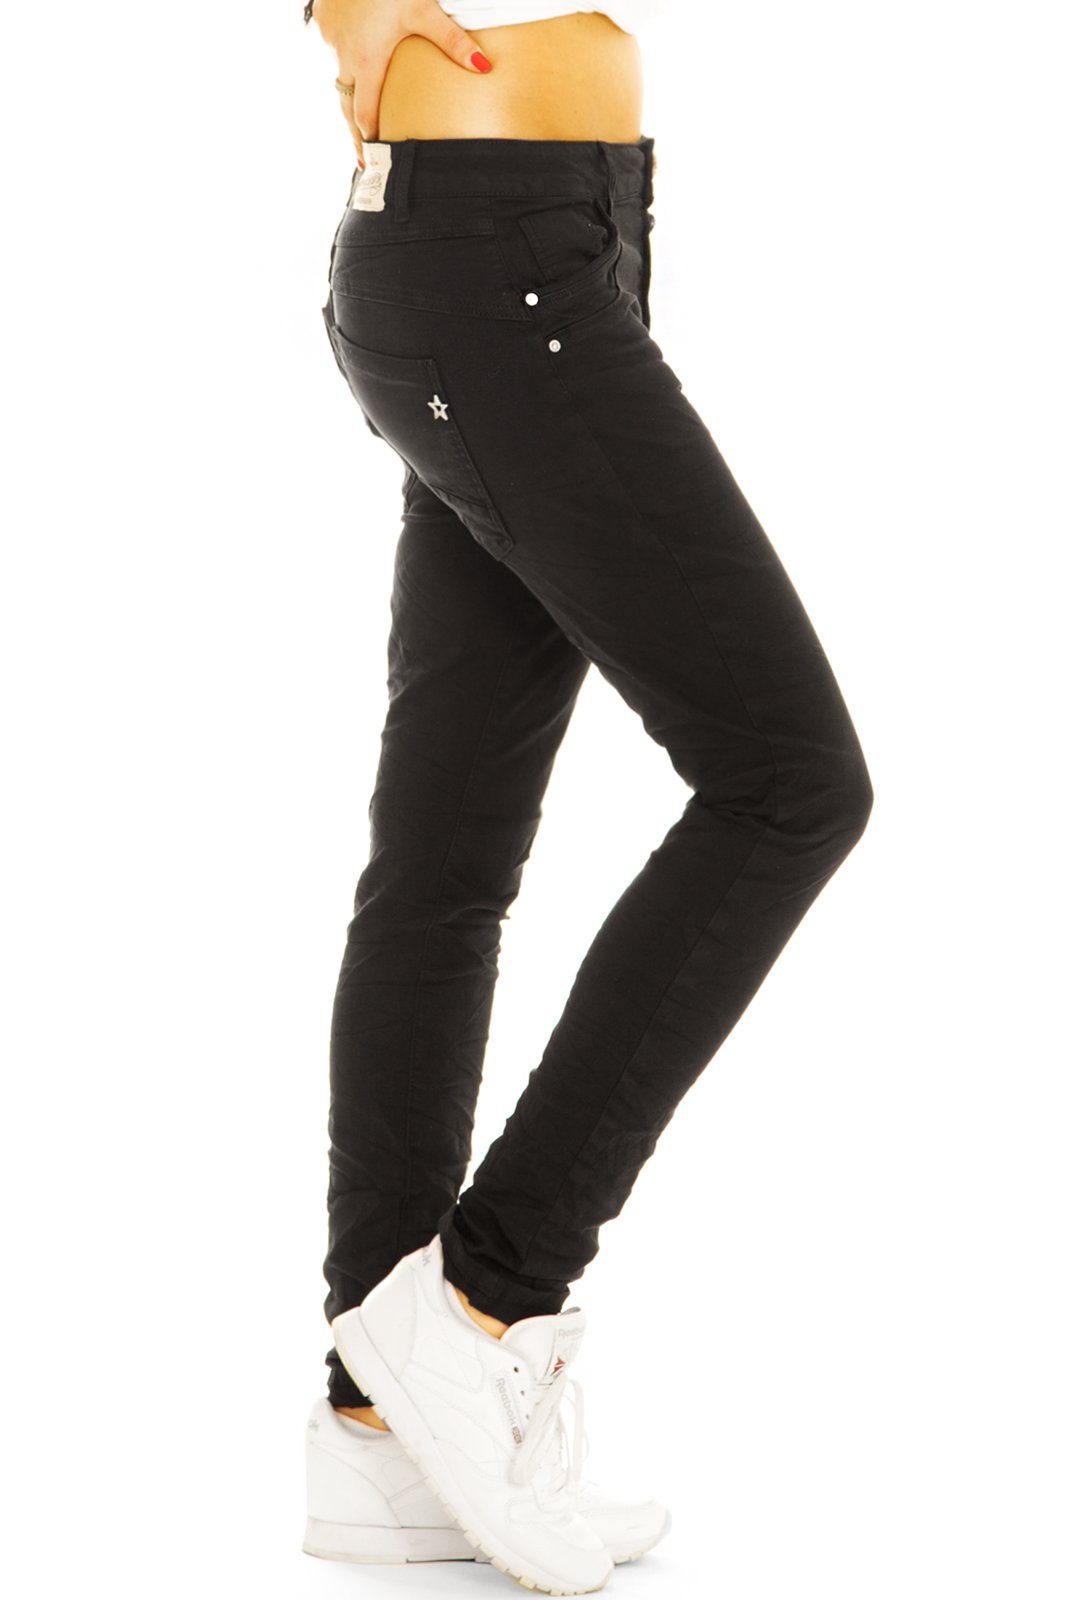 Röhrenjeans be Hose low Damen j43l-1 Hüftjeans hüftige Low-rise-Jeans Low styled low Stretch-Anteil, - 5-Pocket-Style, mit rise - Fit Slim hftig, waist, Waist